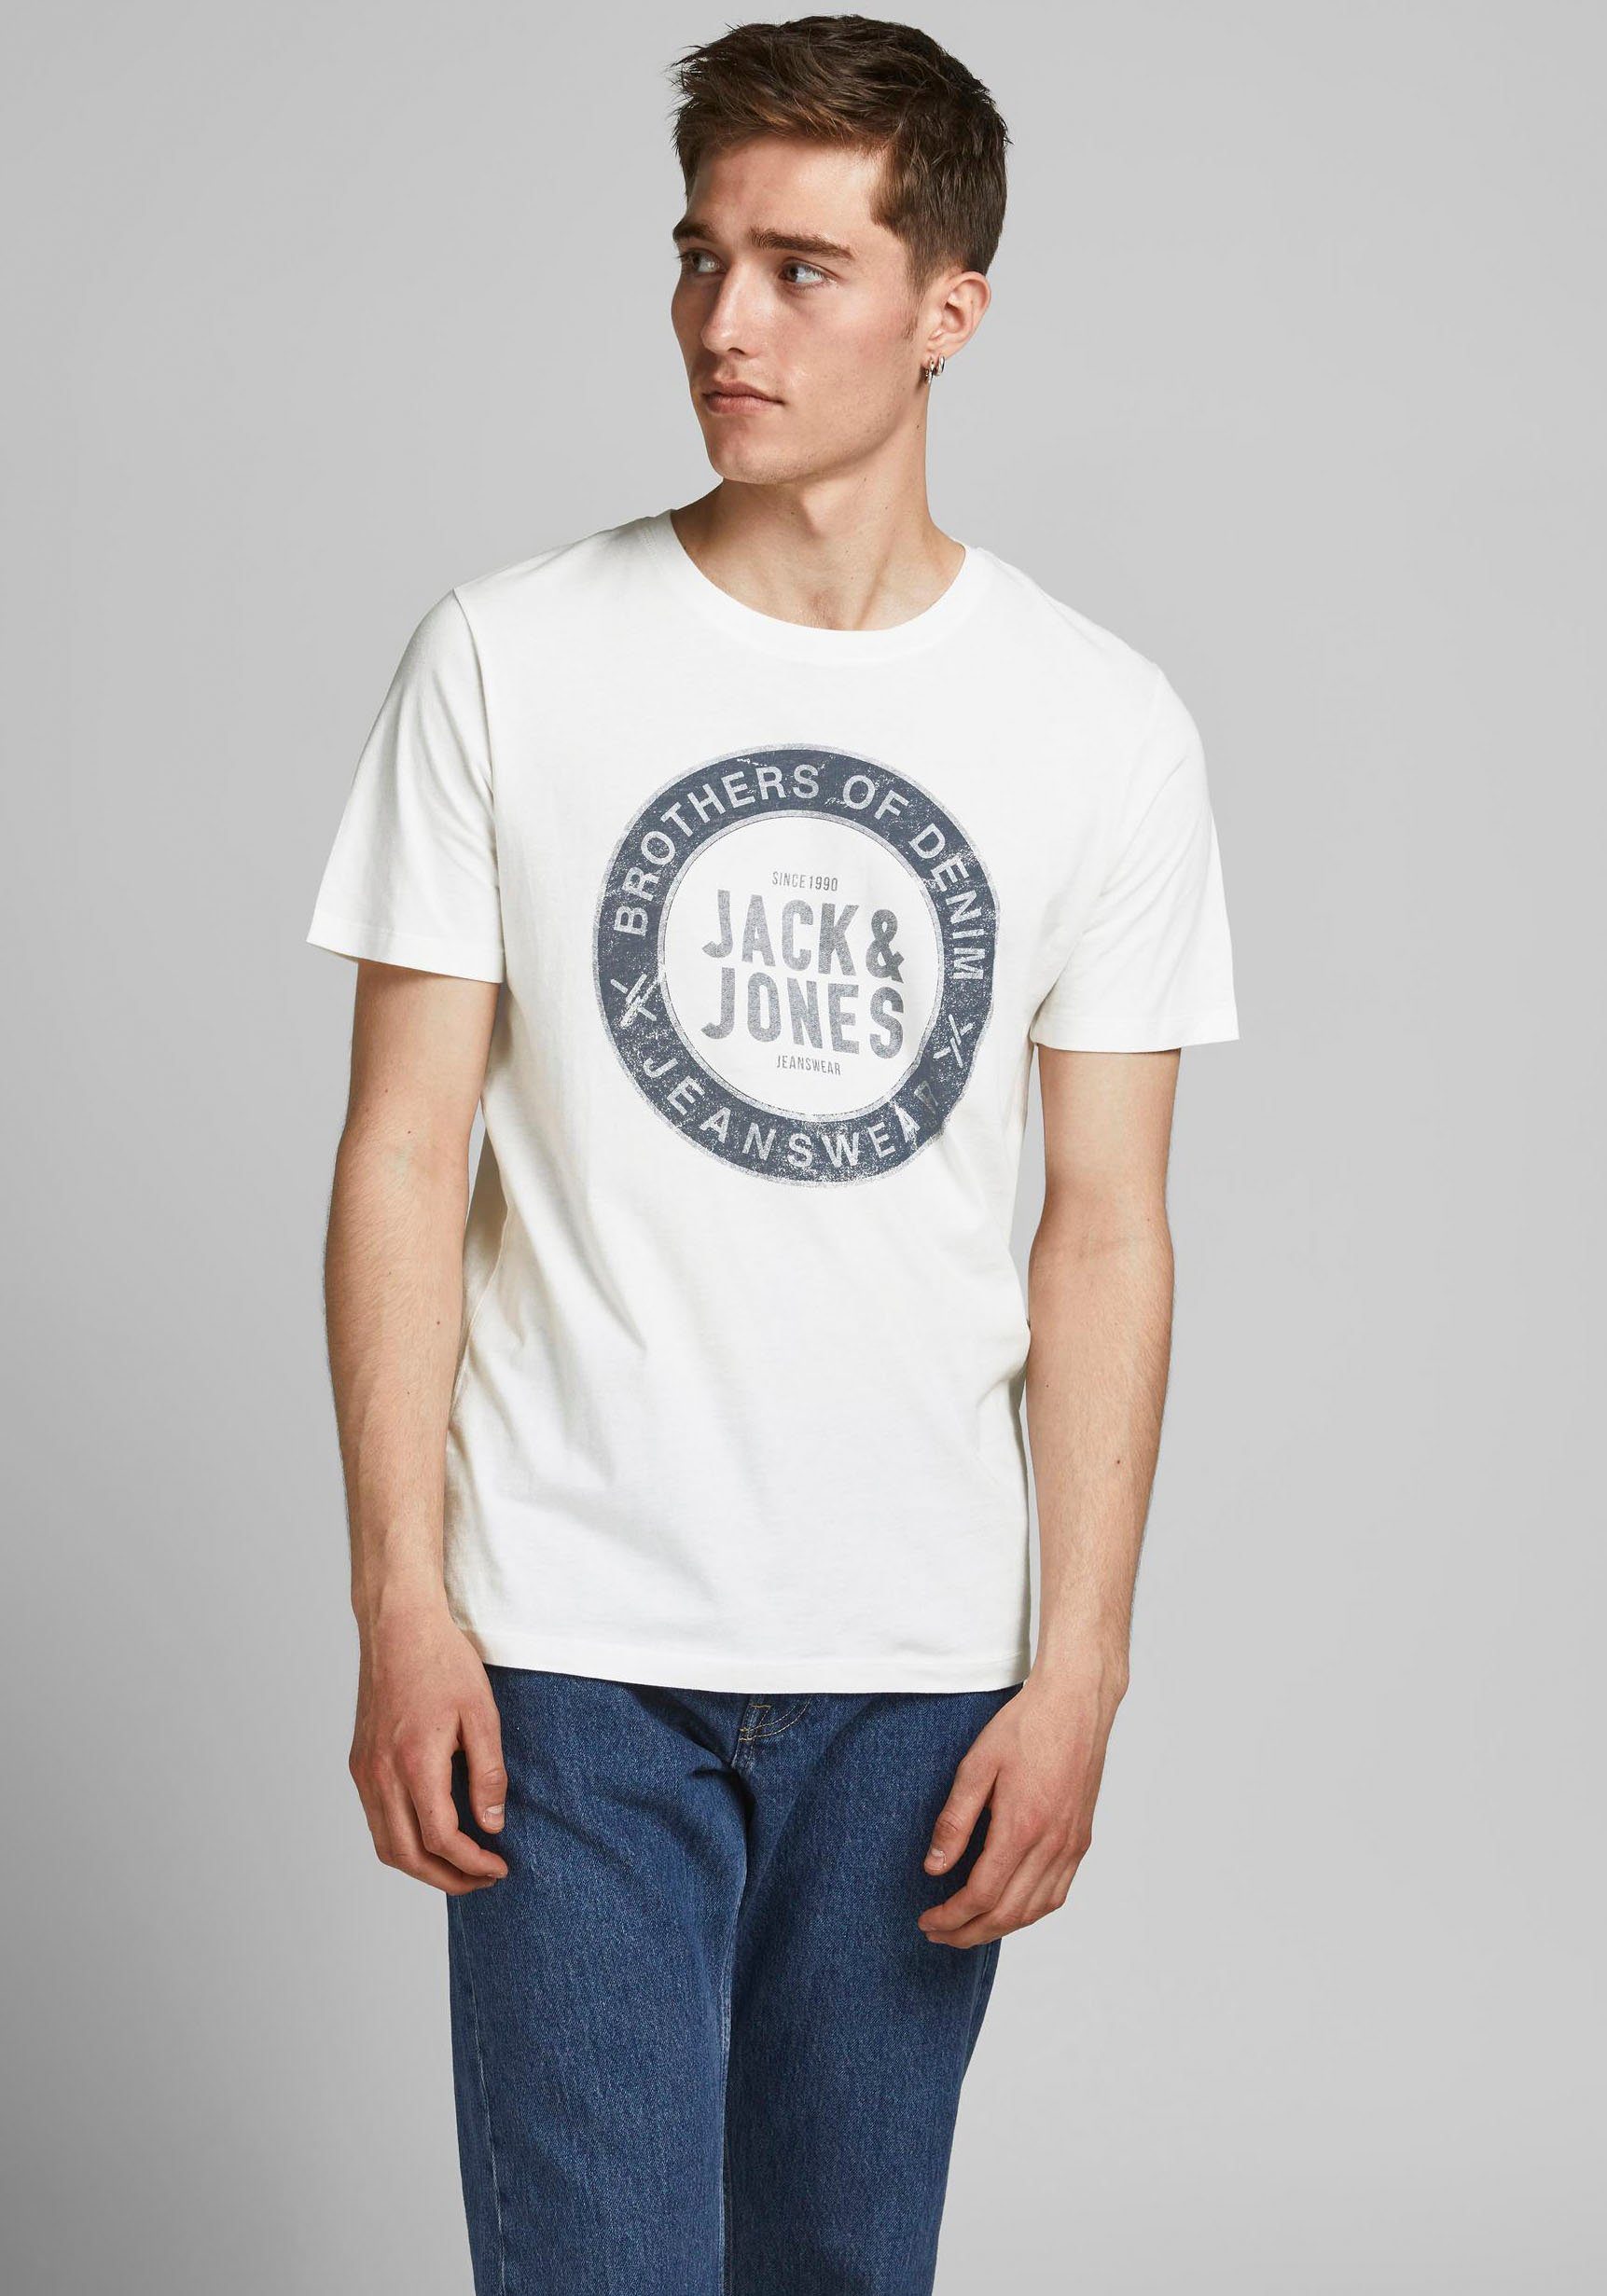 Jack & Jones T-Shirt Jeans Tee offwhite